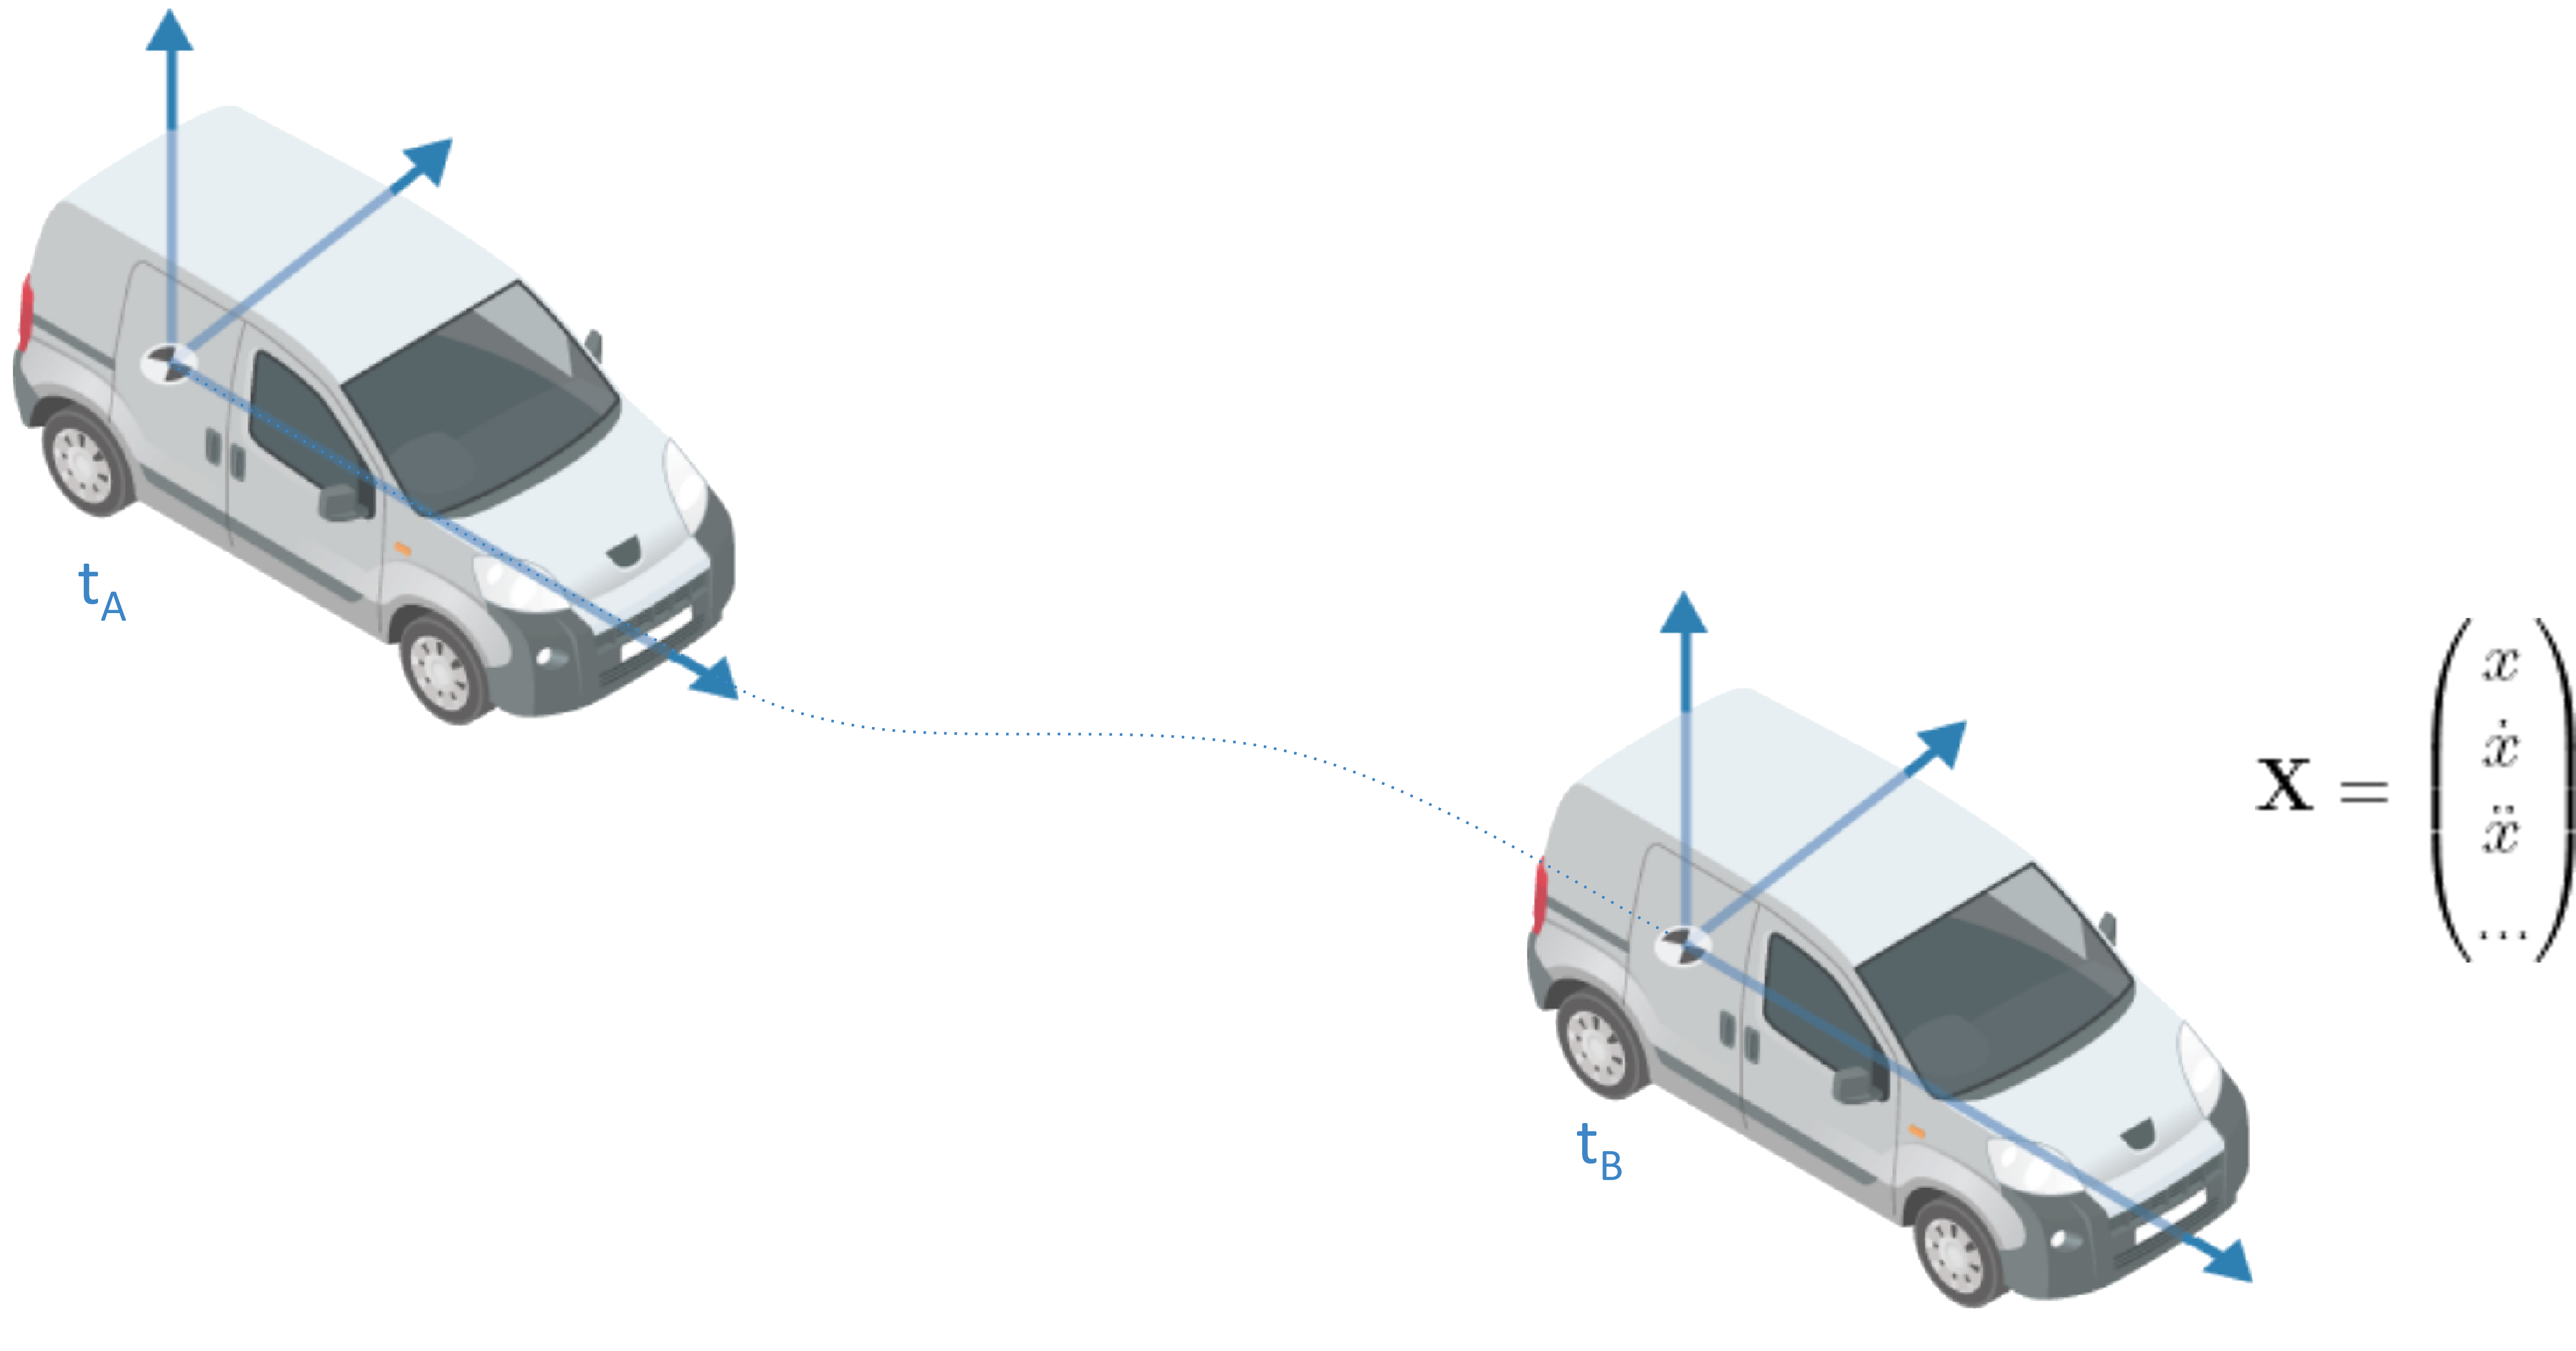  DriveWorks Egomotion 模组利用运动模型来跟踪和预测车辆姿态